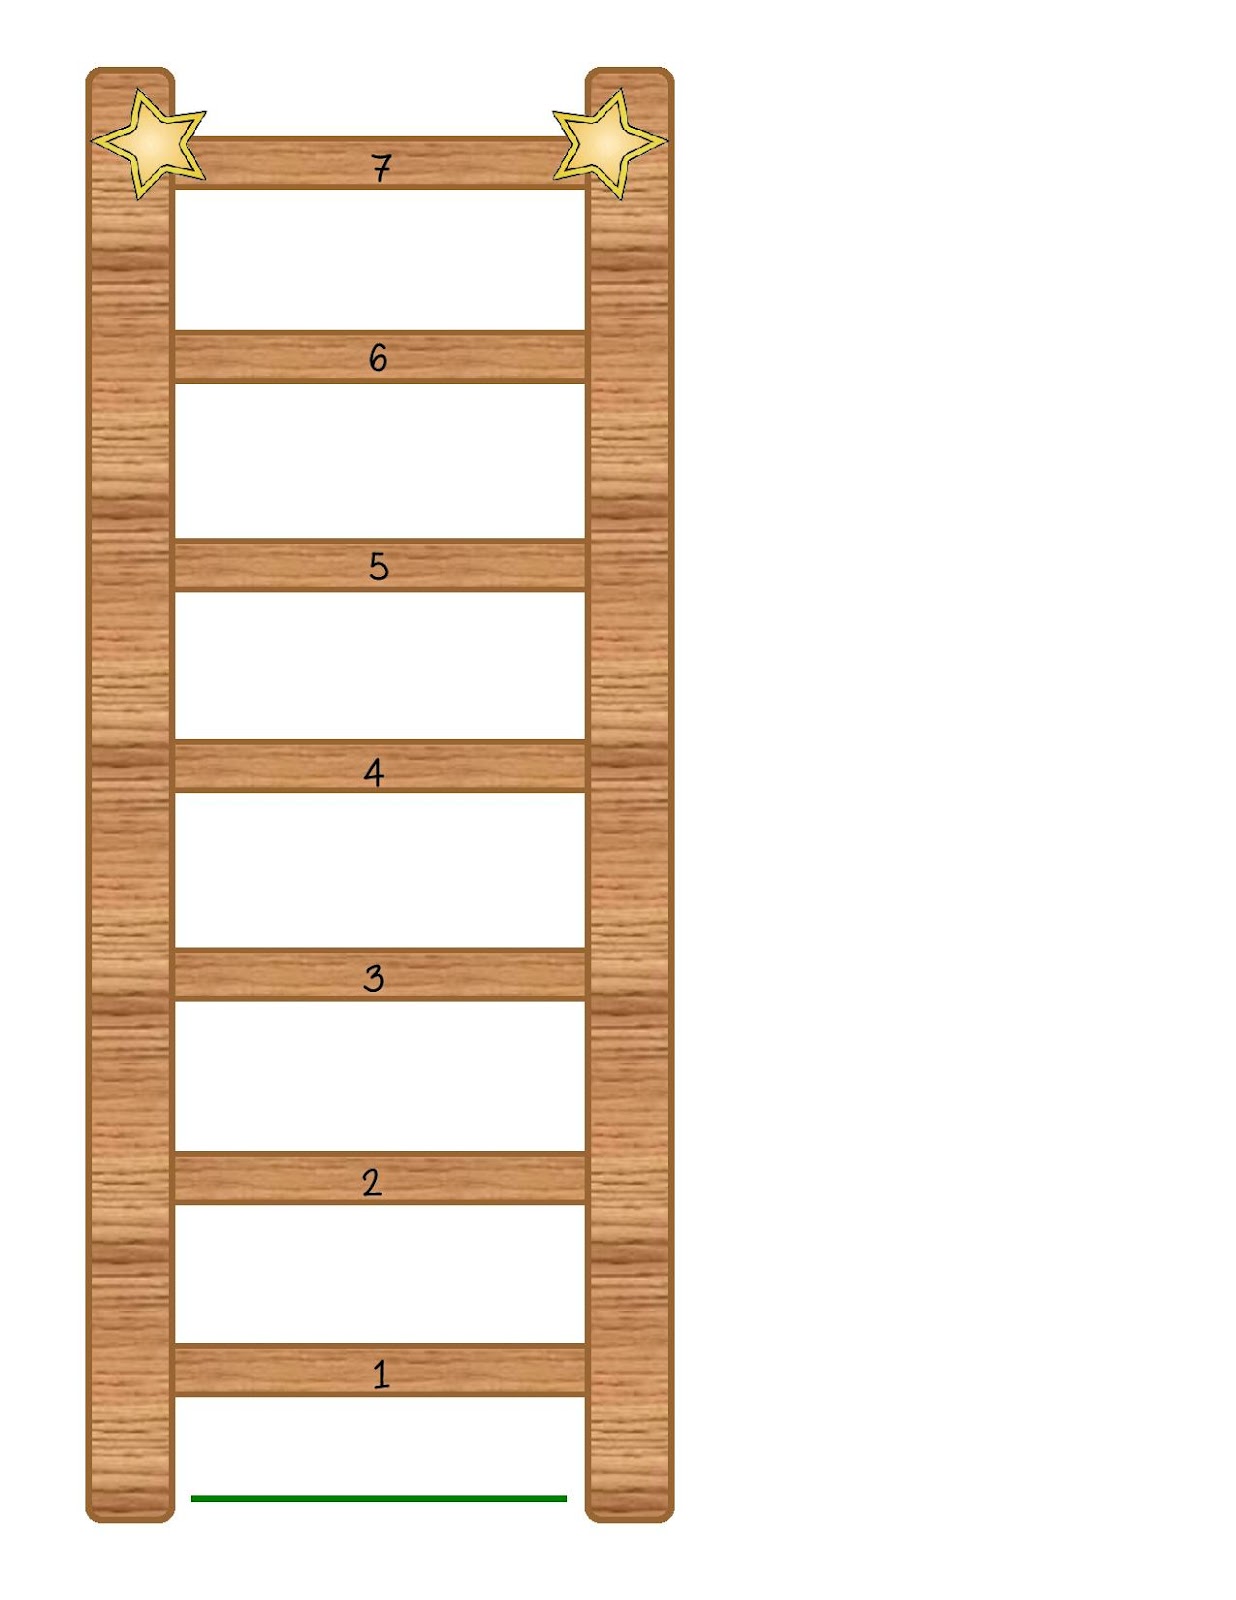 Free Printable Goal Ladder